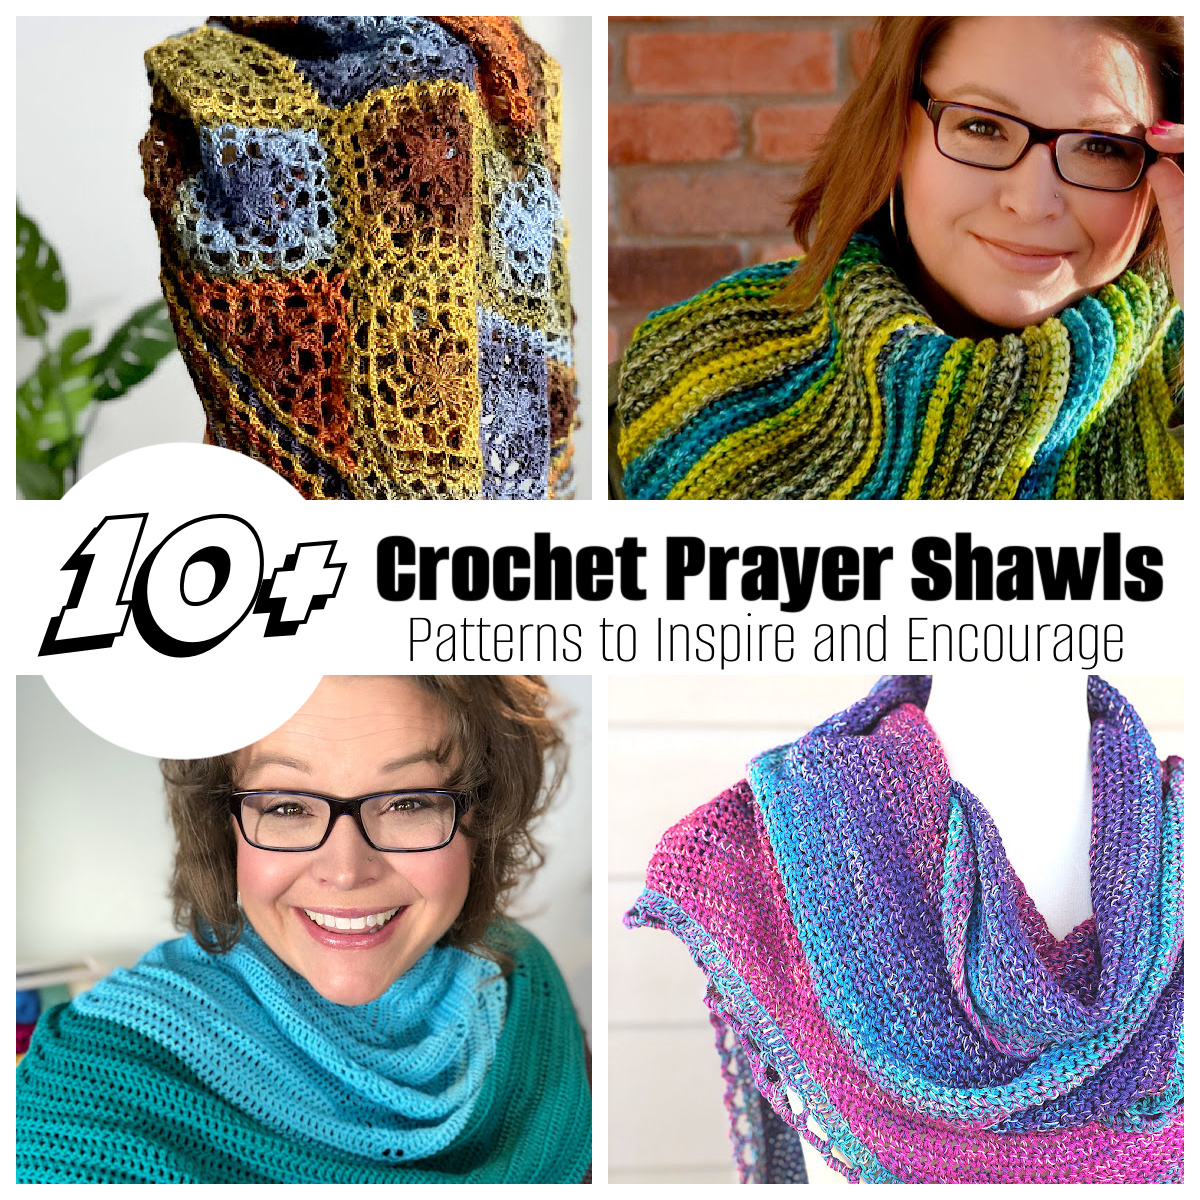 Should Christians use a prayer shawl?